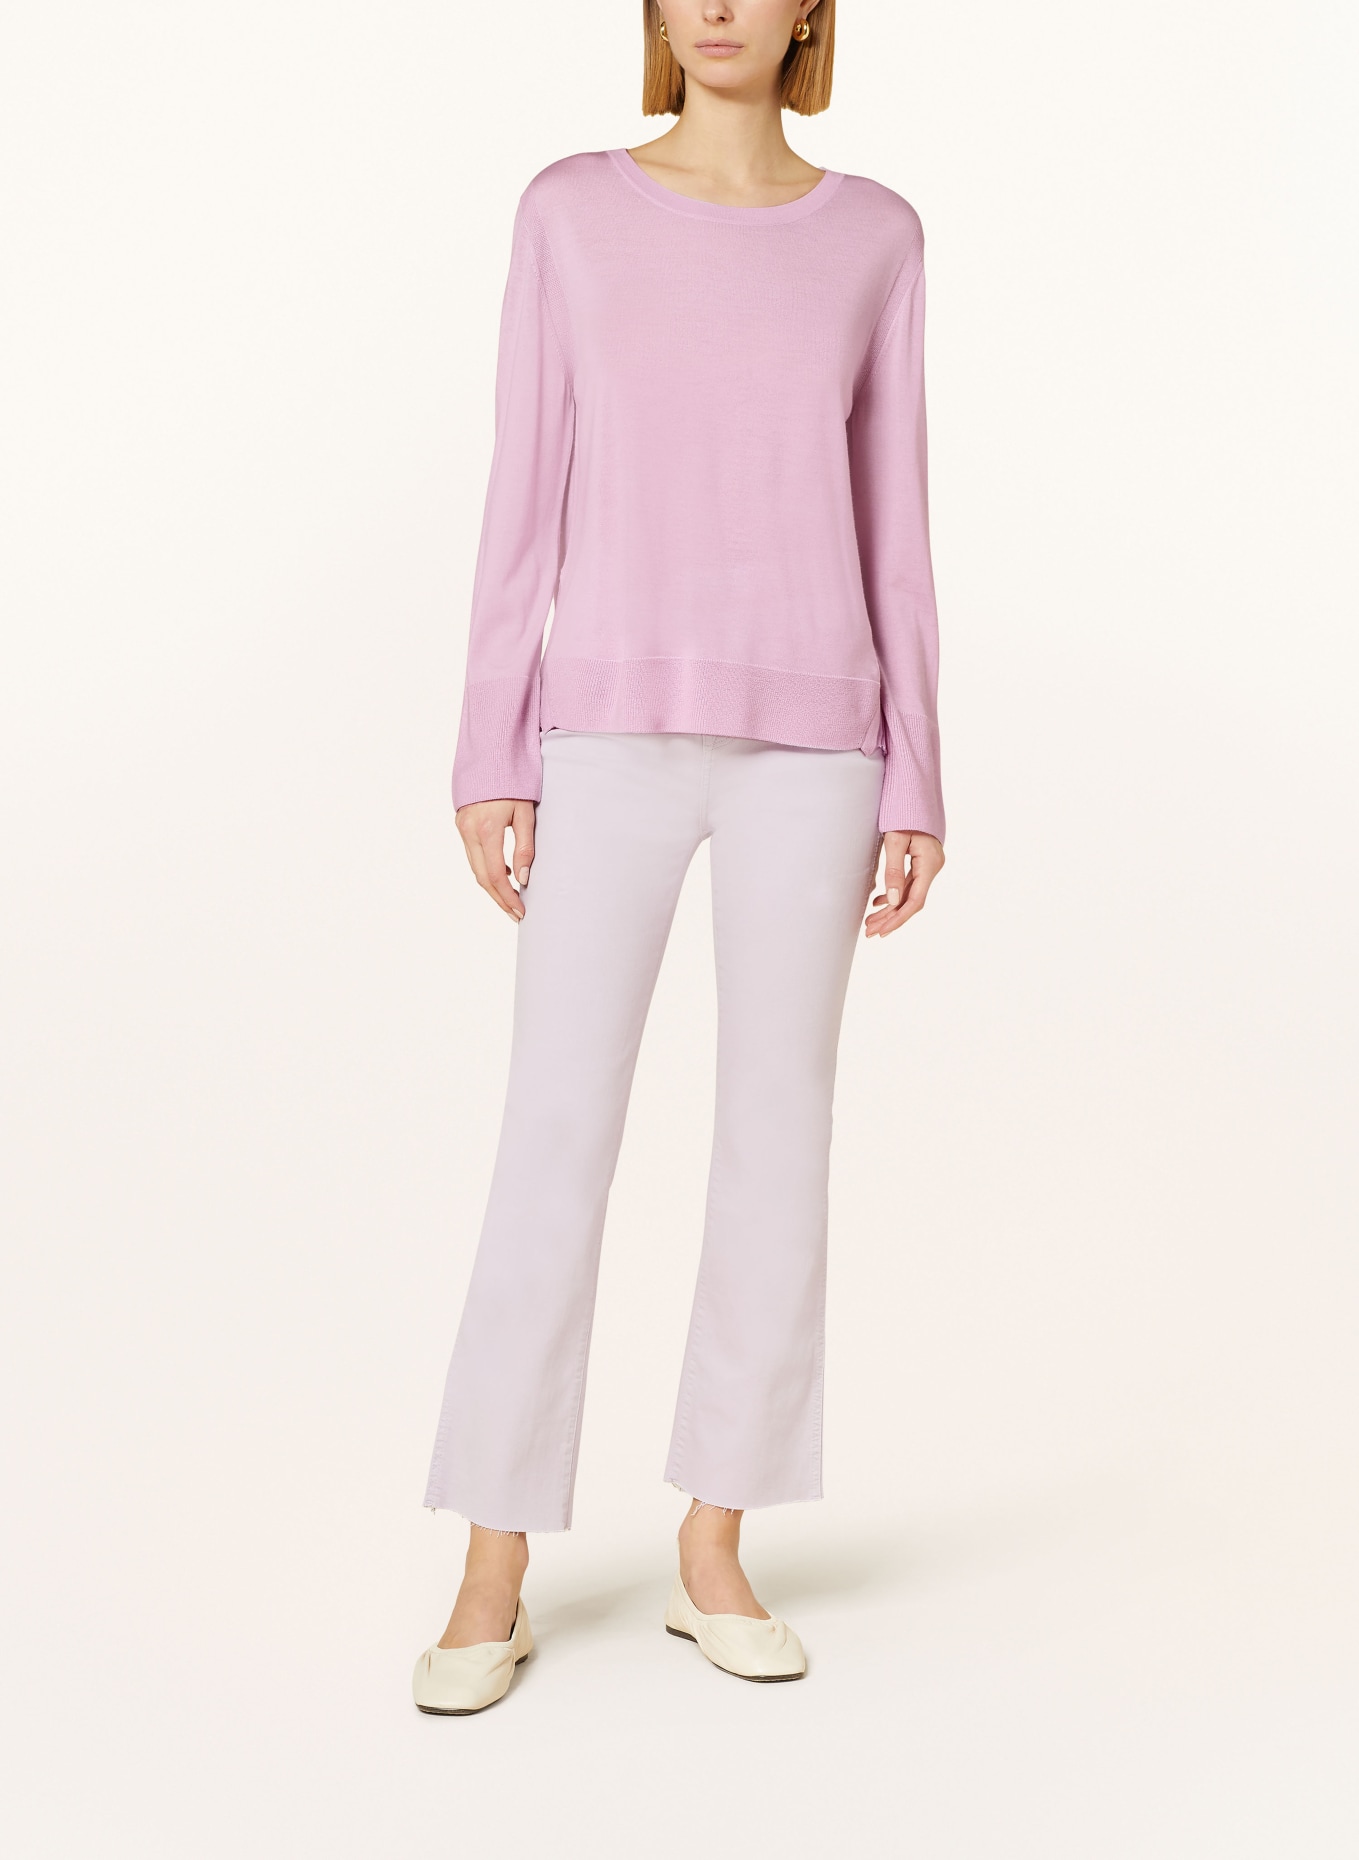 MARC CAIN Pullover, Farbe: 709 pink lavender (Bild 2)